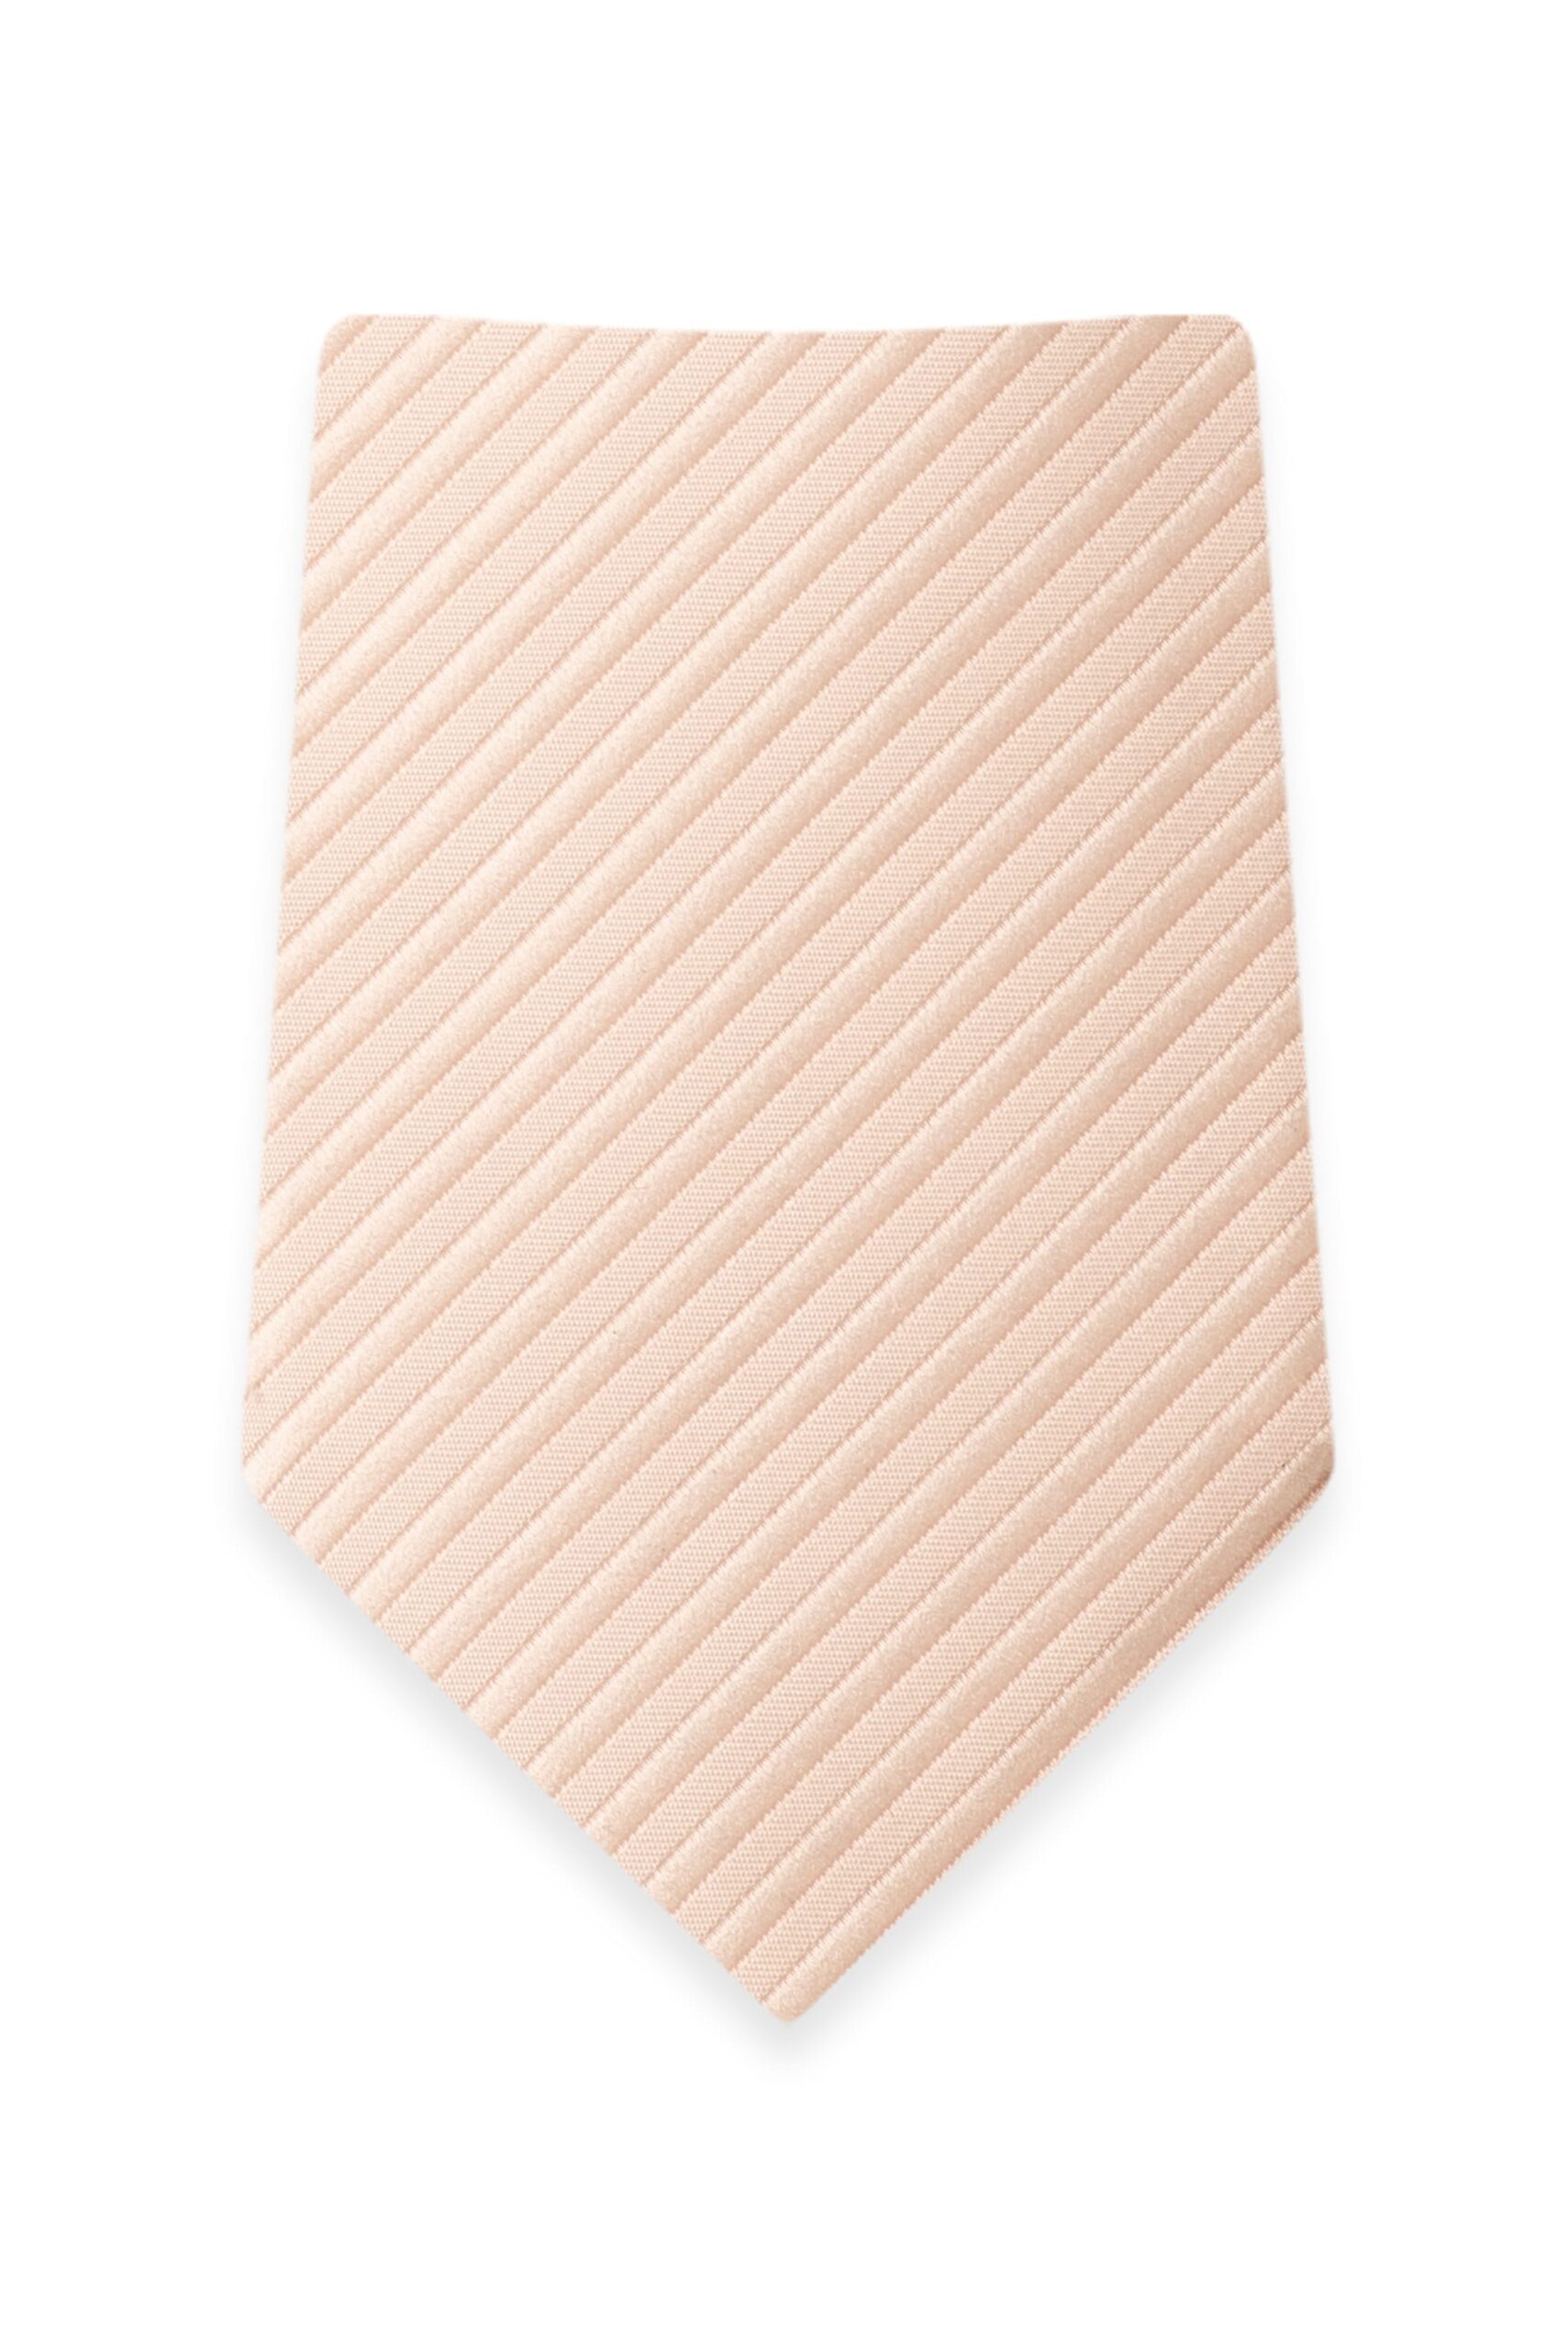 Striped Blush Self-Tie Windsor Tie